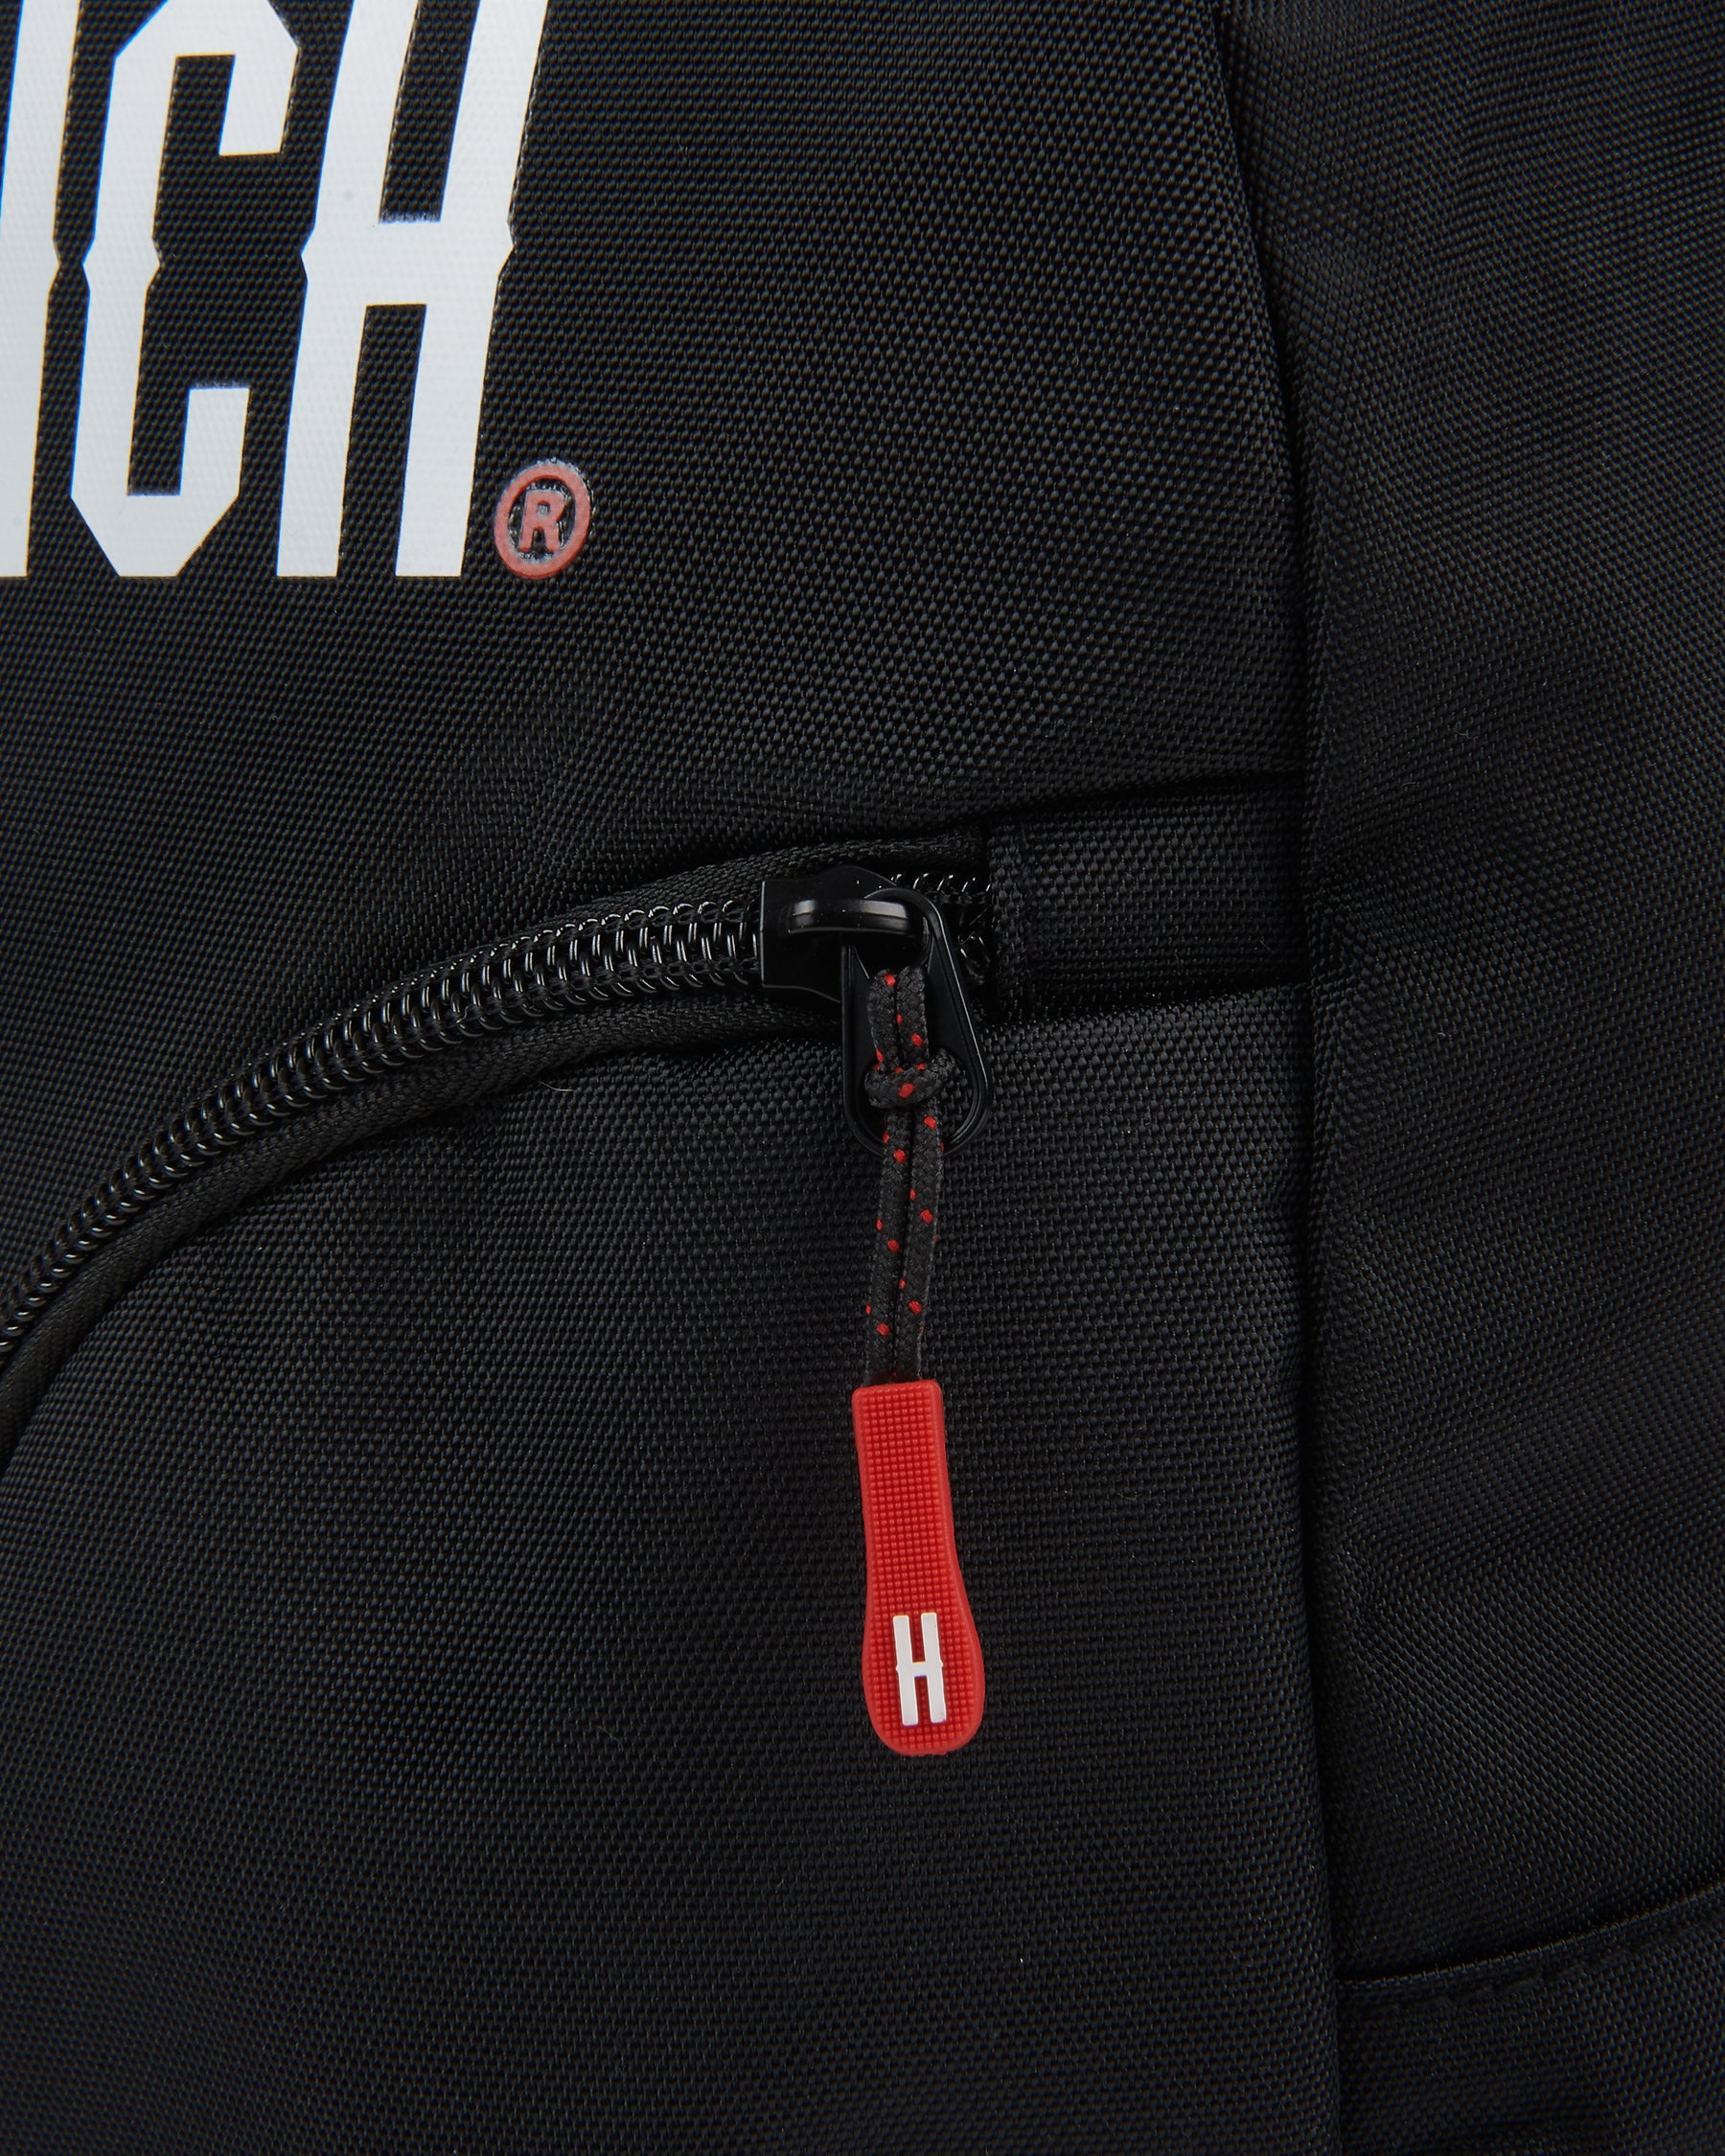 OG Cycle Backpack - Black/White/Red